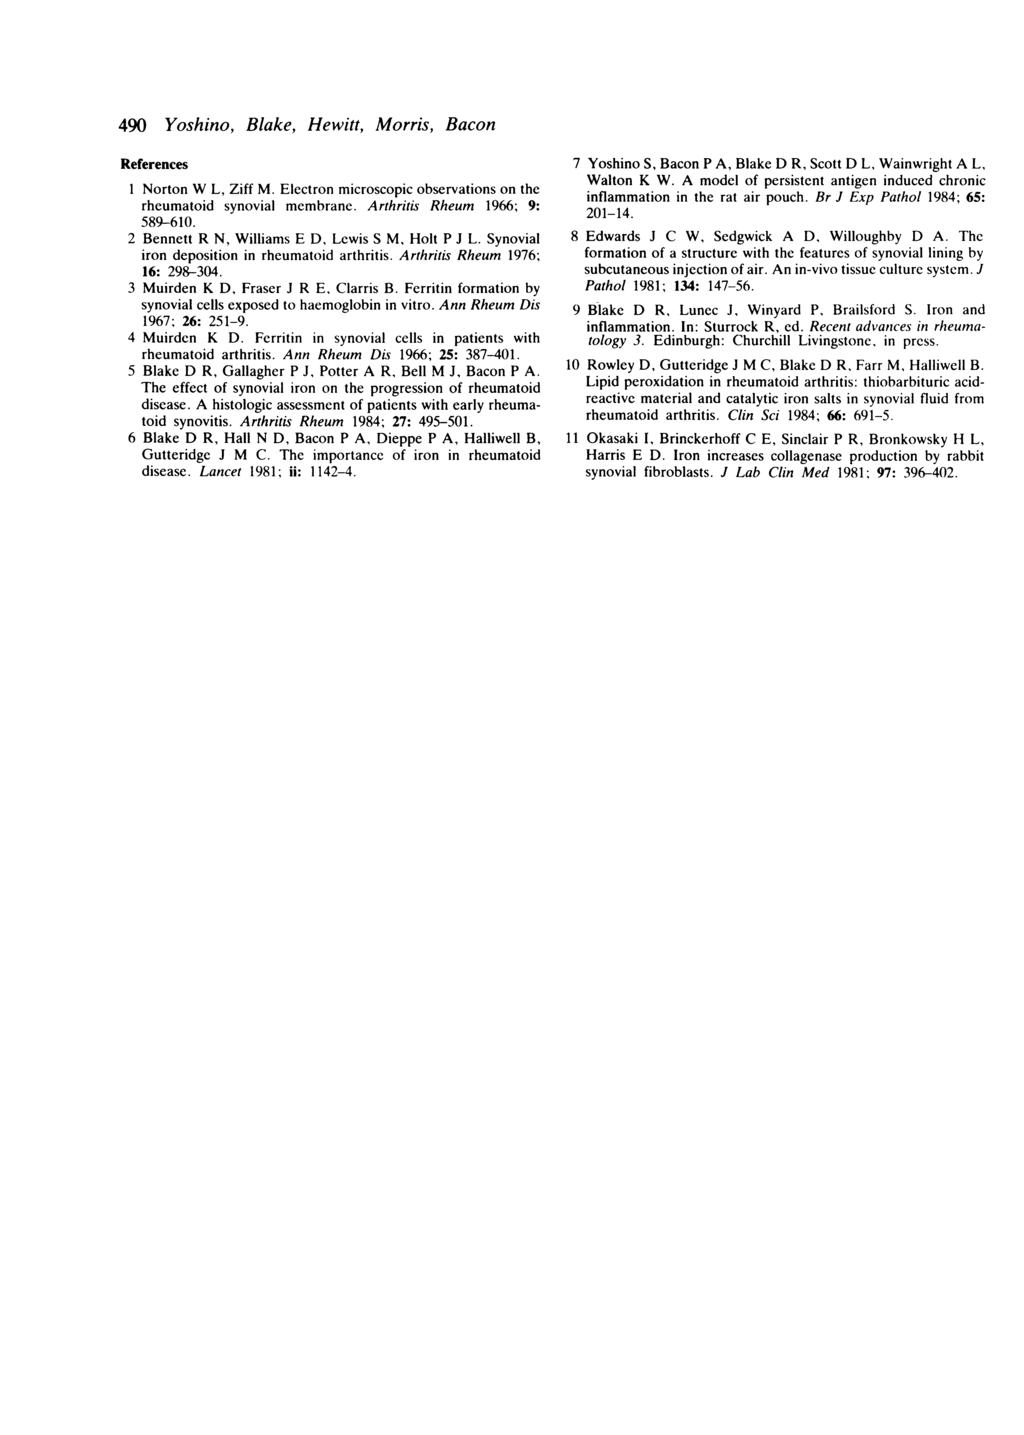 490 Yoshino, Blake, Hewitt, Morris, Bacon References I Norton W L, Ziff M. Electron microscopic observations on the rheumatoid synovial membrane. Arthritis Rheum 1966; 9: 589-610.